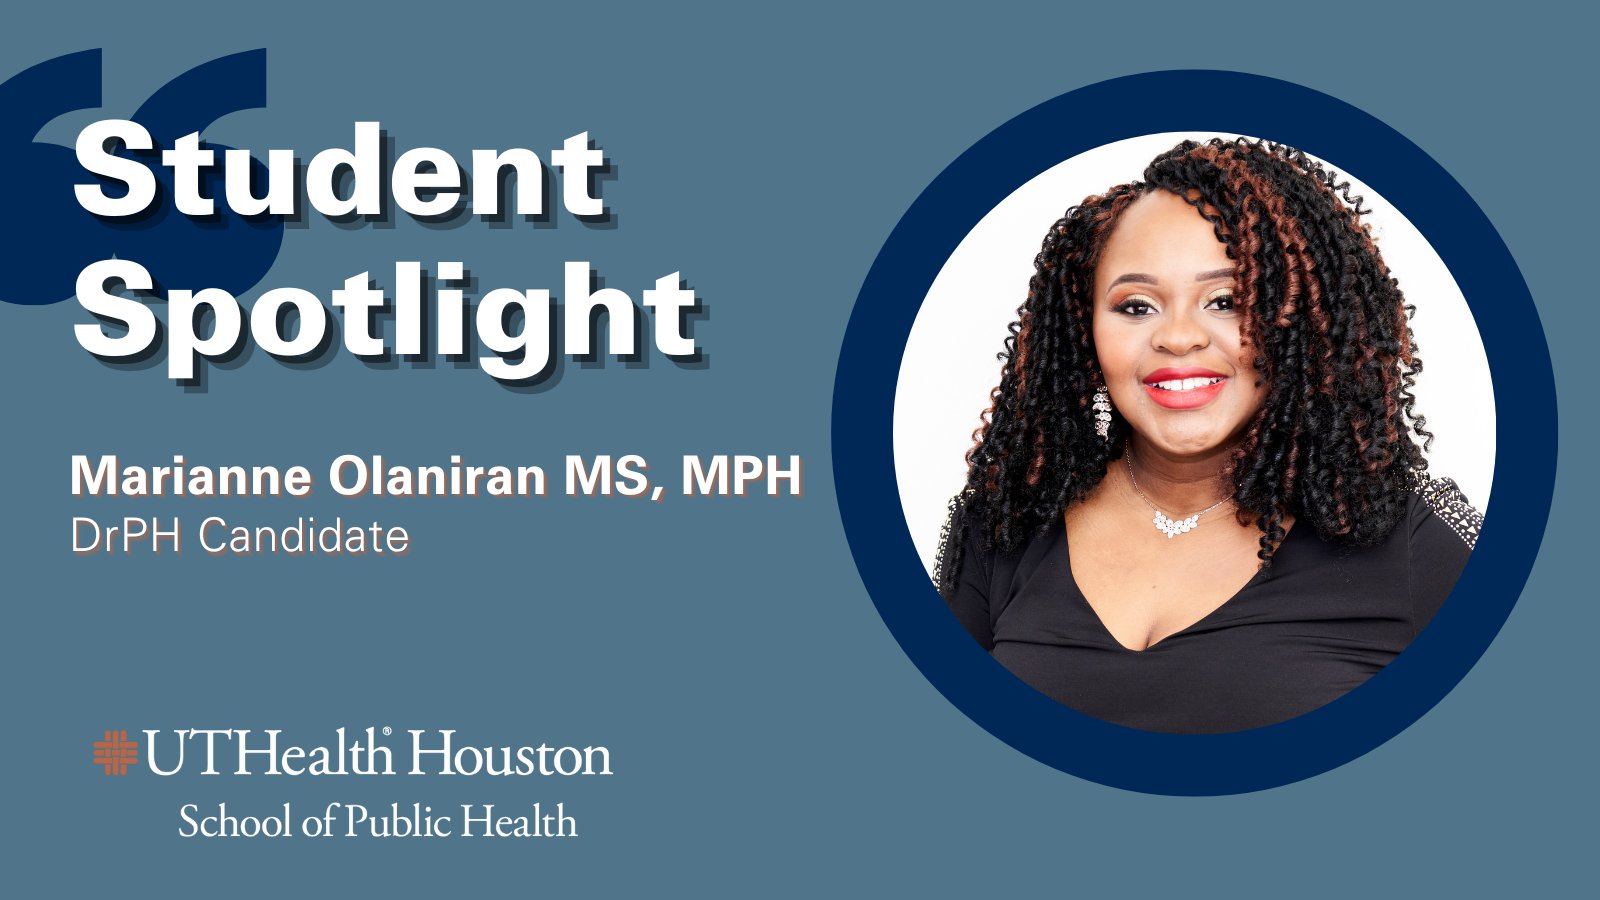 Student Spotlight: Behind Marianne Olaniran MS, MPH